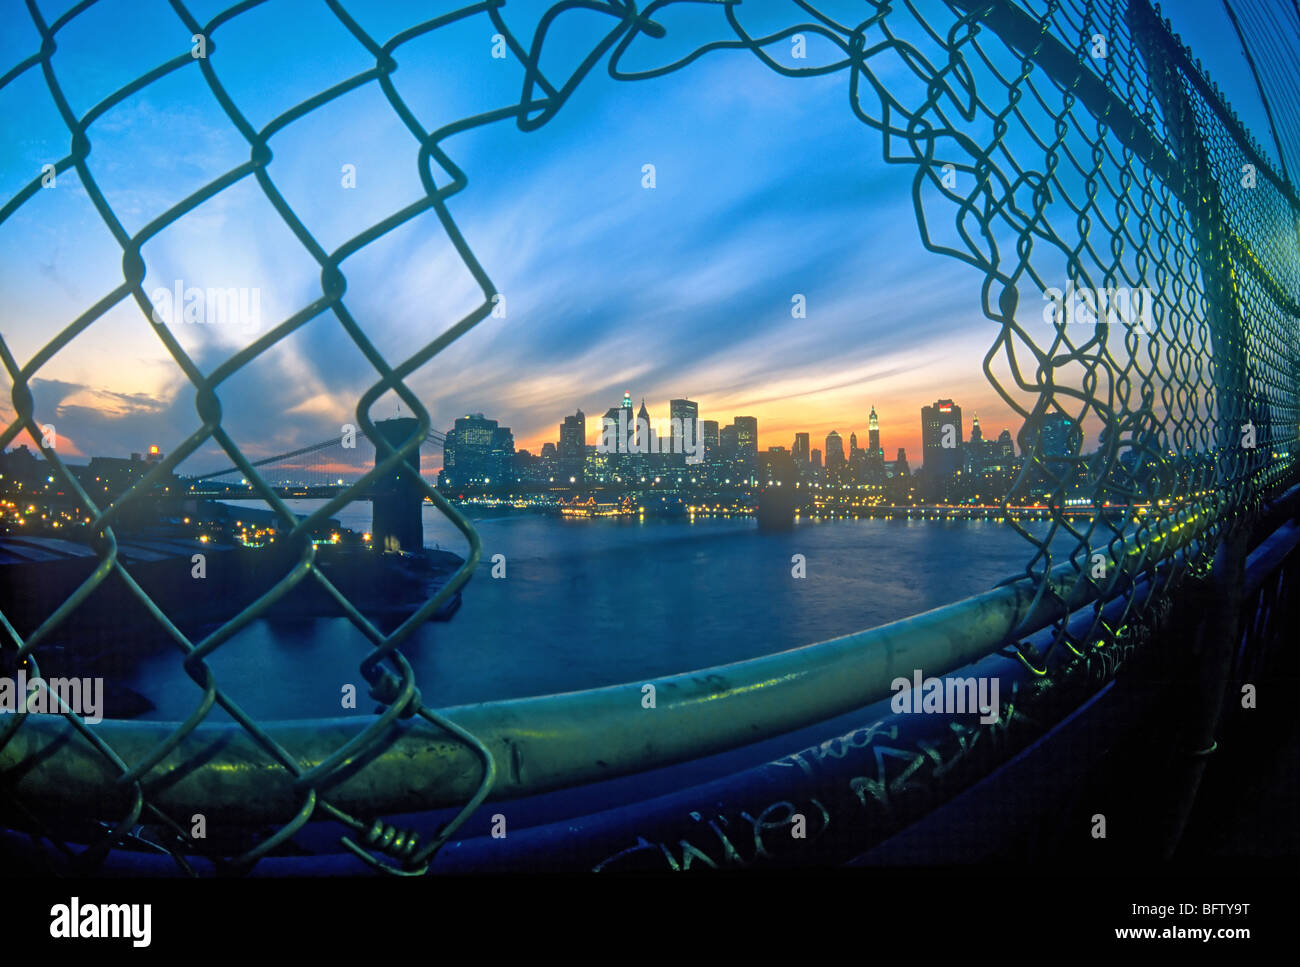 New York City skyline as seen through a hole in the fence on the Manhattan bridge Stock Photo